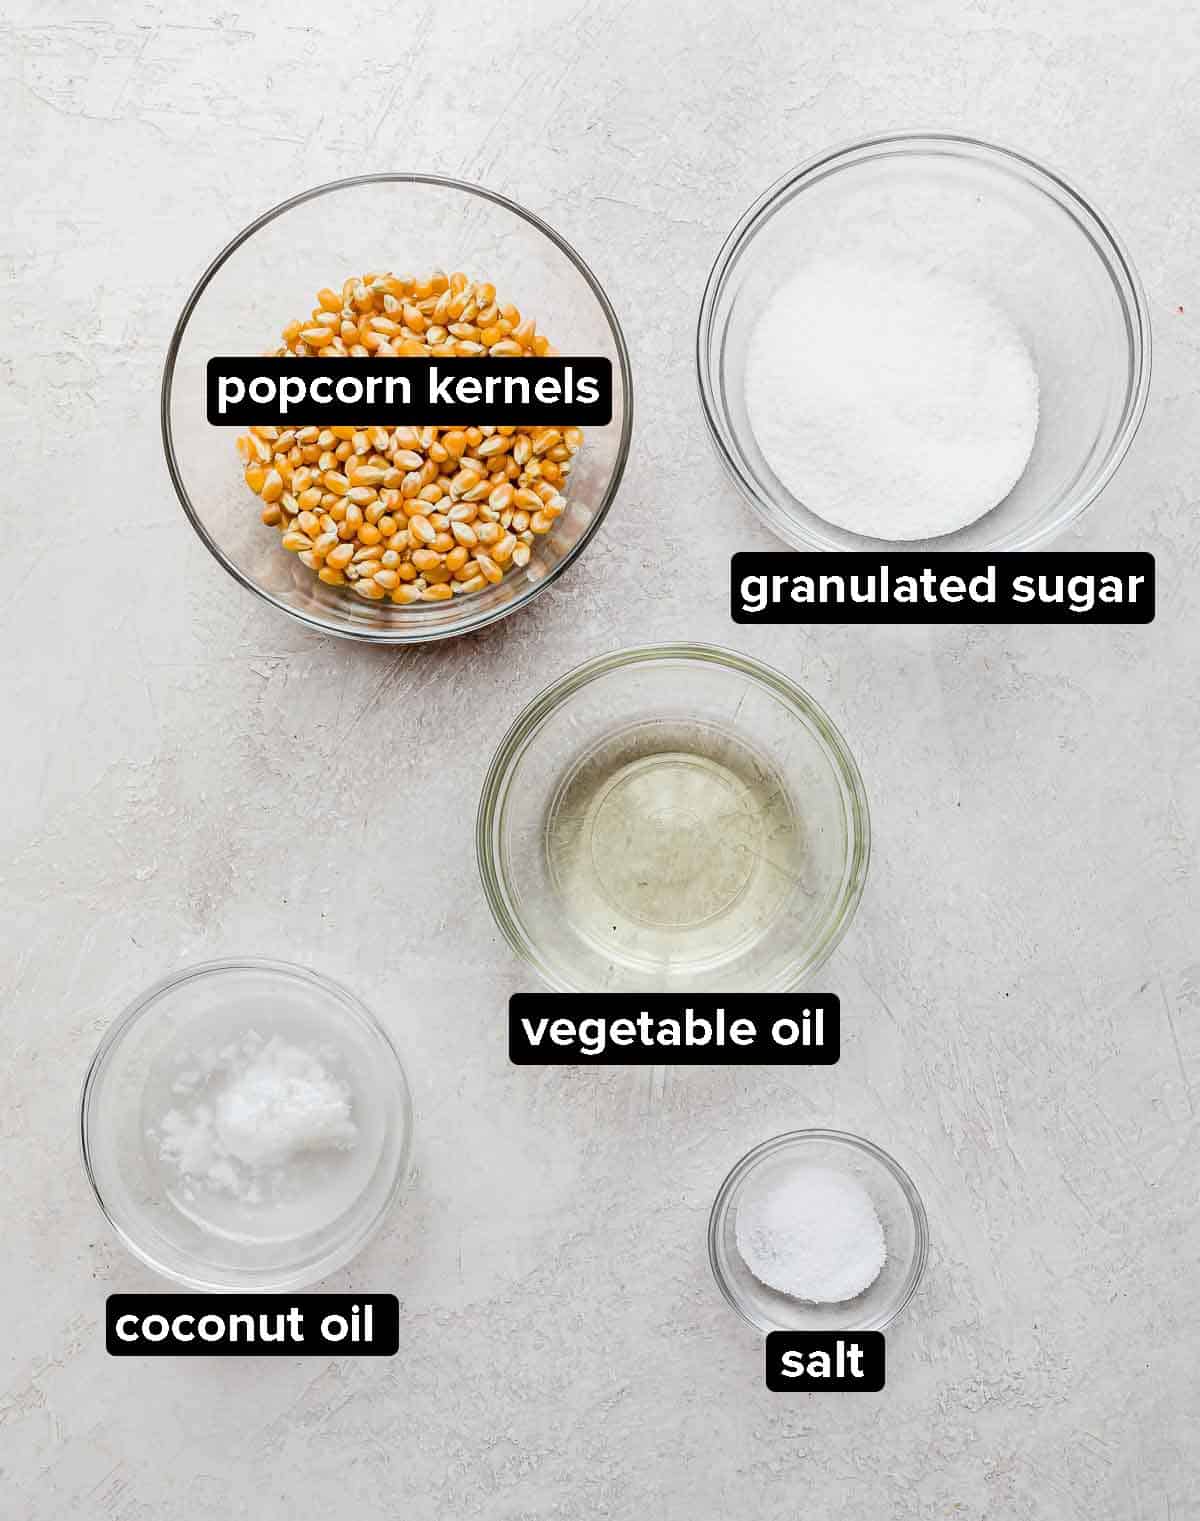 Kettle Corn Popcorn ingredients on a light gray textured background: vegetable oil, coconut oil, popcorn kernels, salt, and granulated sugar.